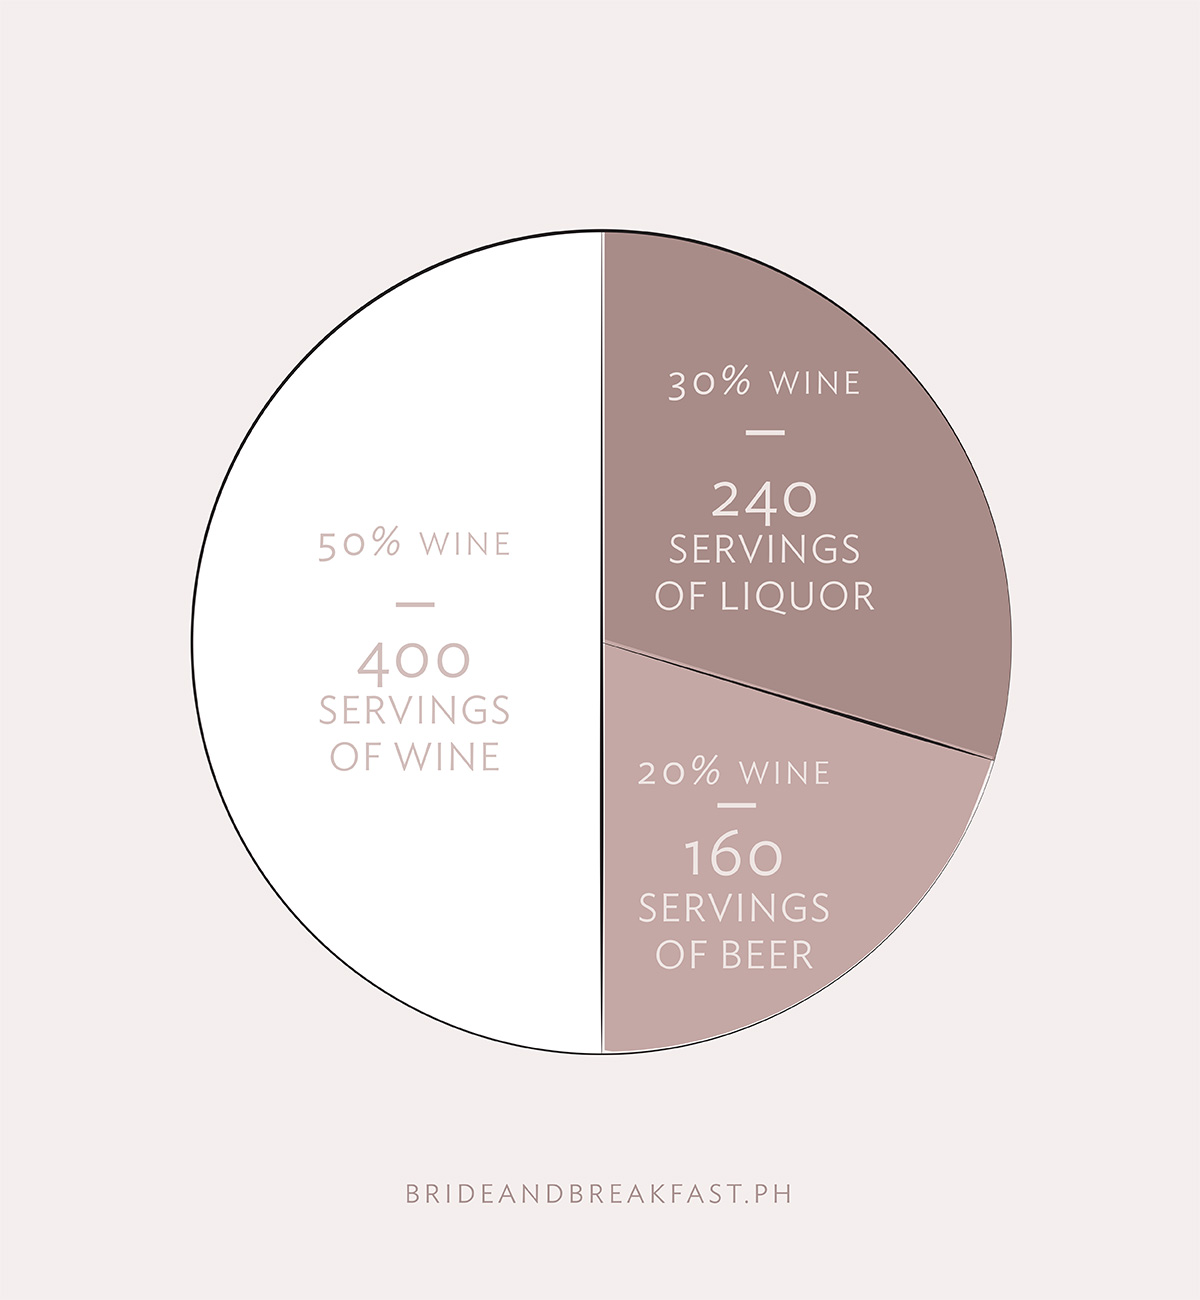 50% wine: 400 servings of wine30% liquor: 240 servings of liquor20% beer: 160 servings of beer